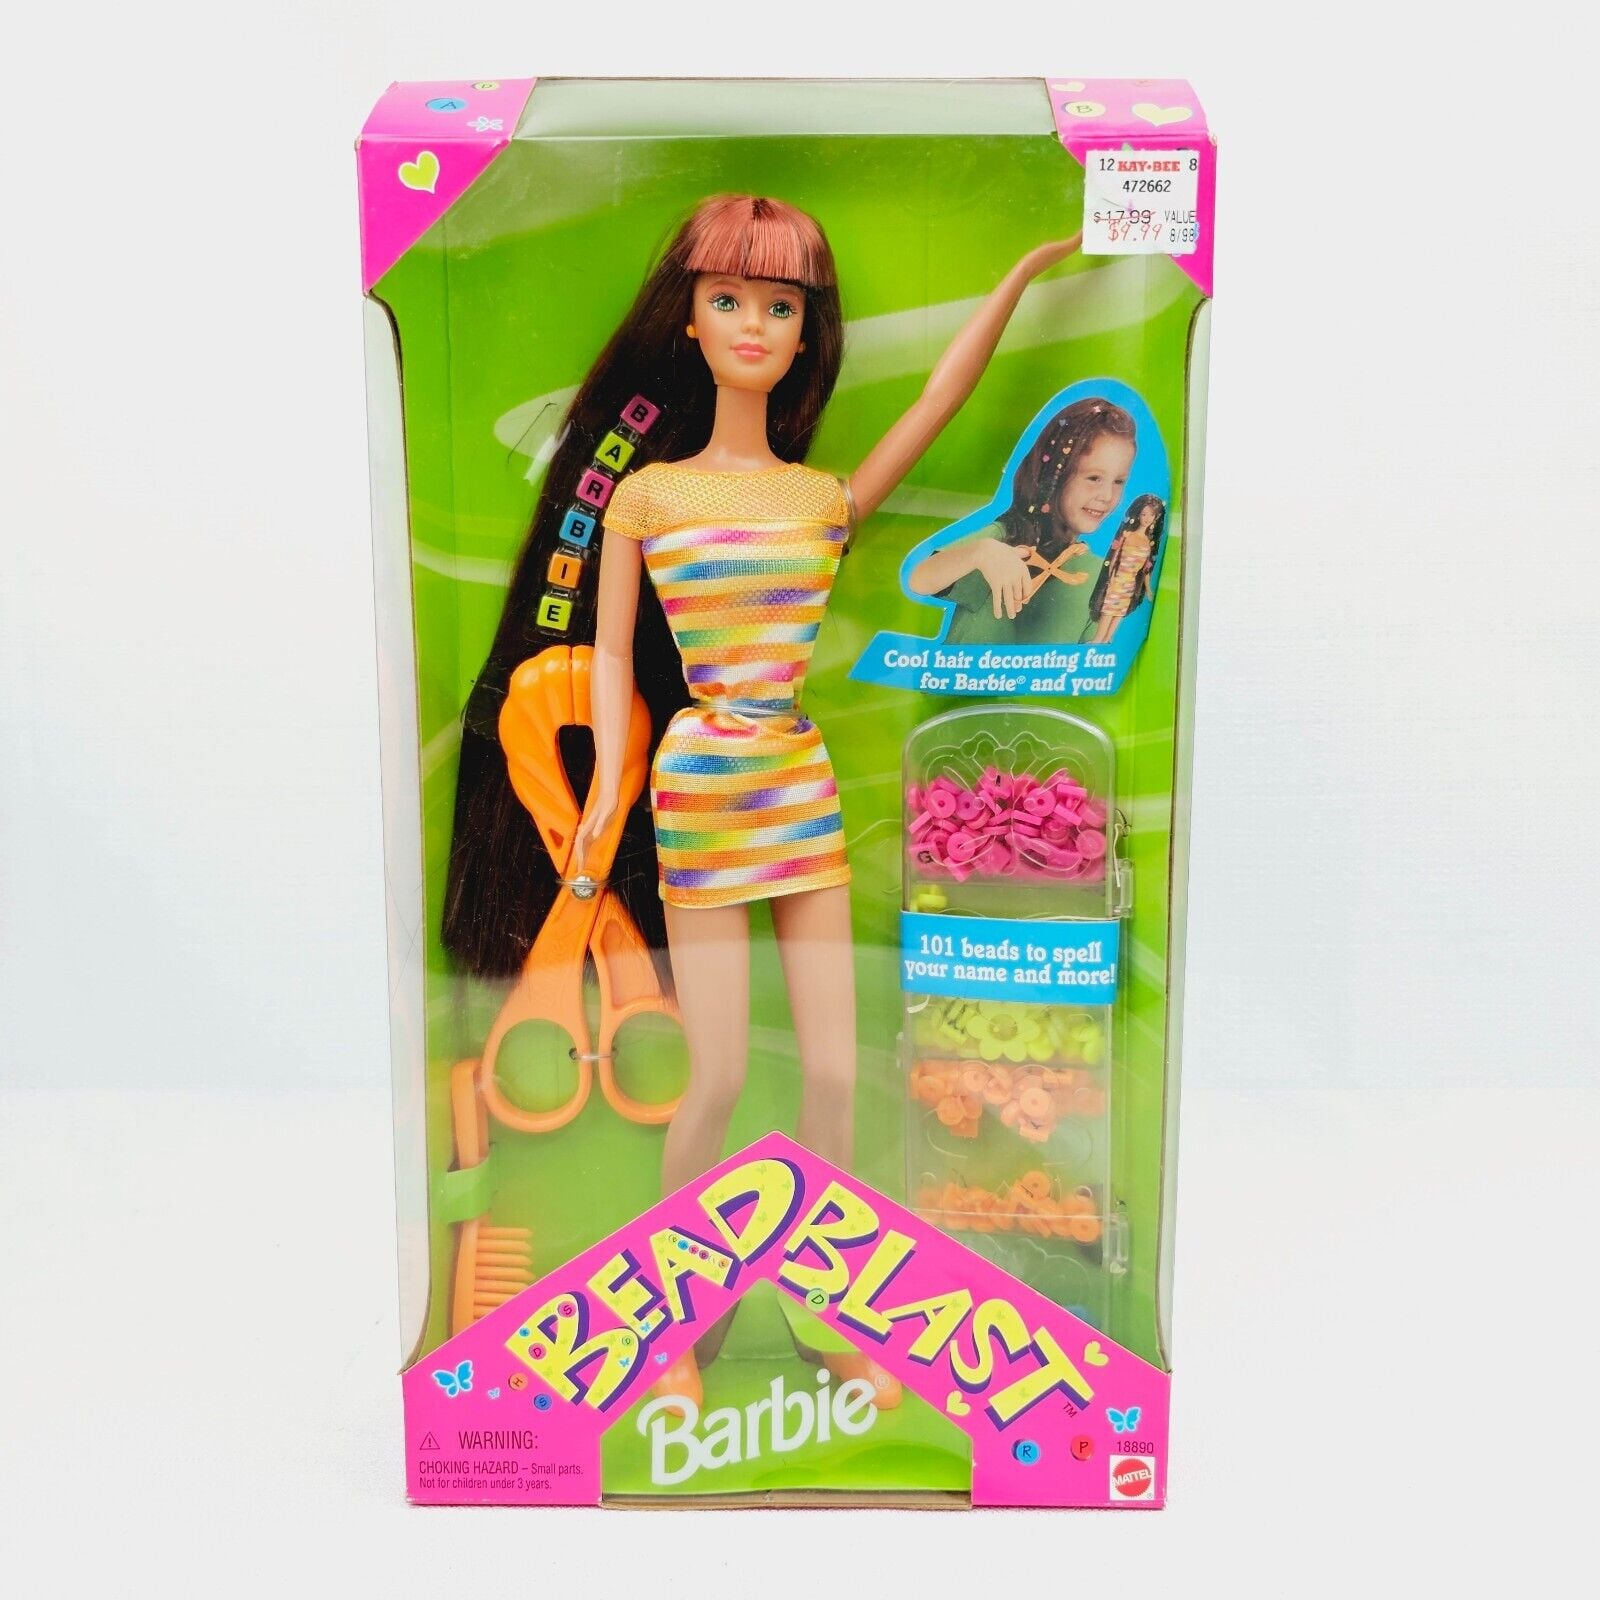 My designer collection *so far* : r/Barbie